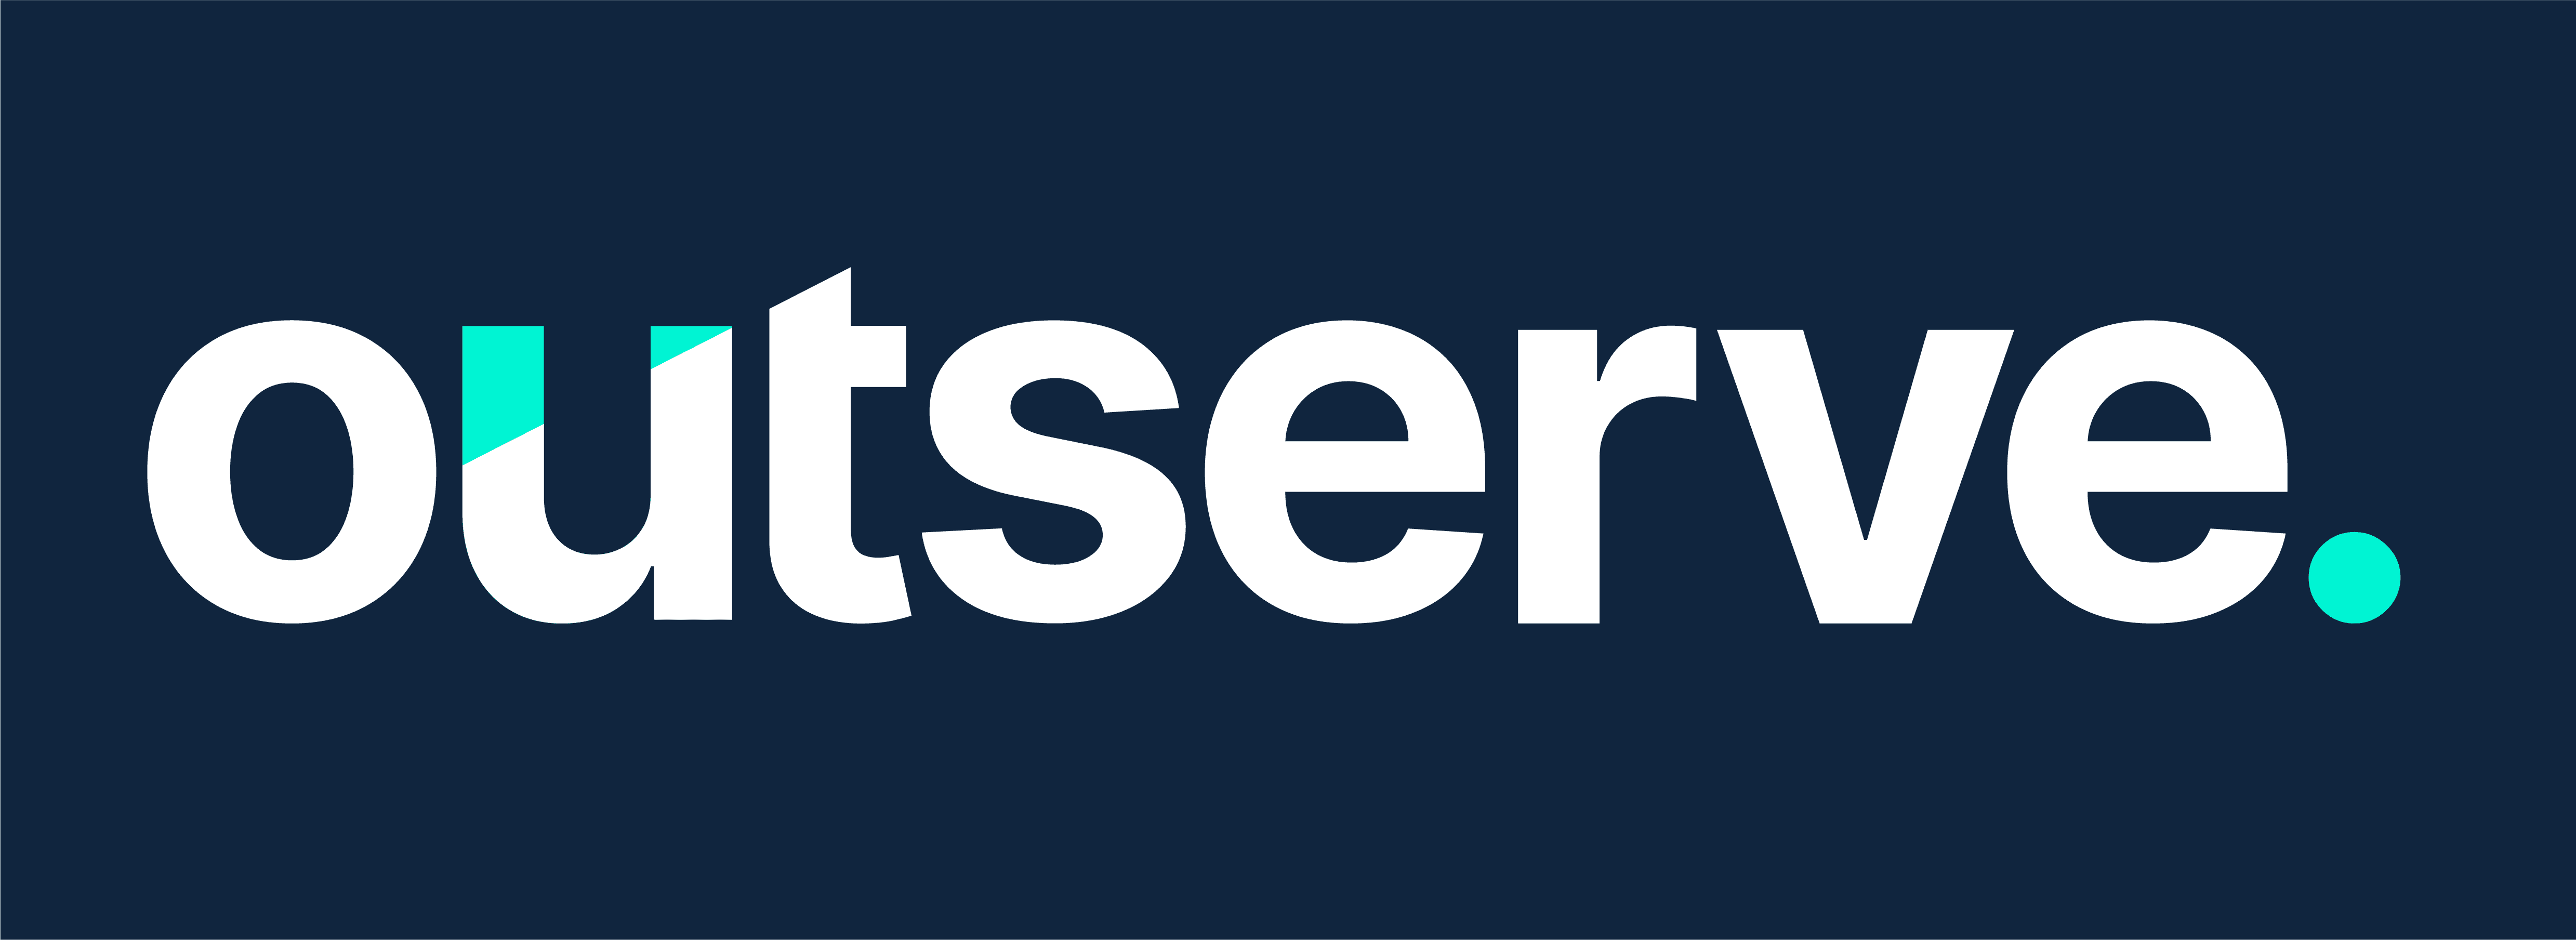 outserve logo